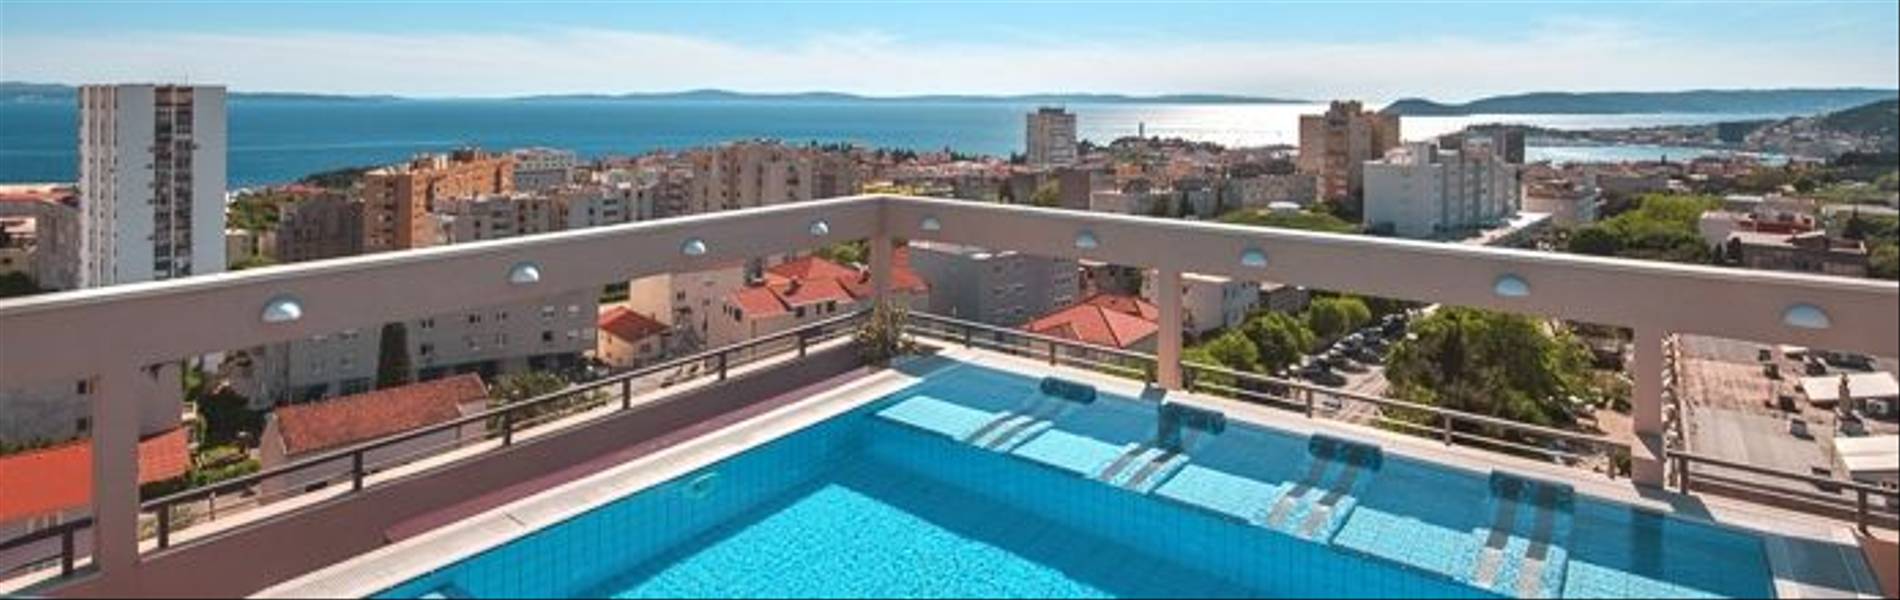 HotelResidence_DIOKLECIJAN_rooftop-pool-day-panorama_2048px_DSC03575-695x409.jpg